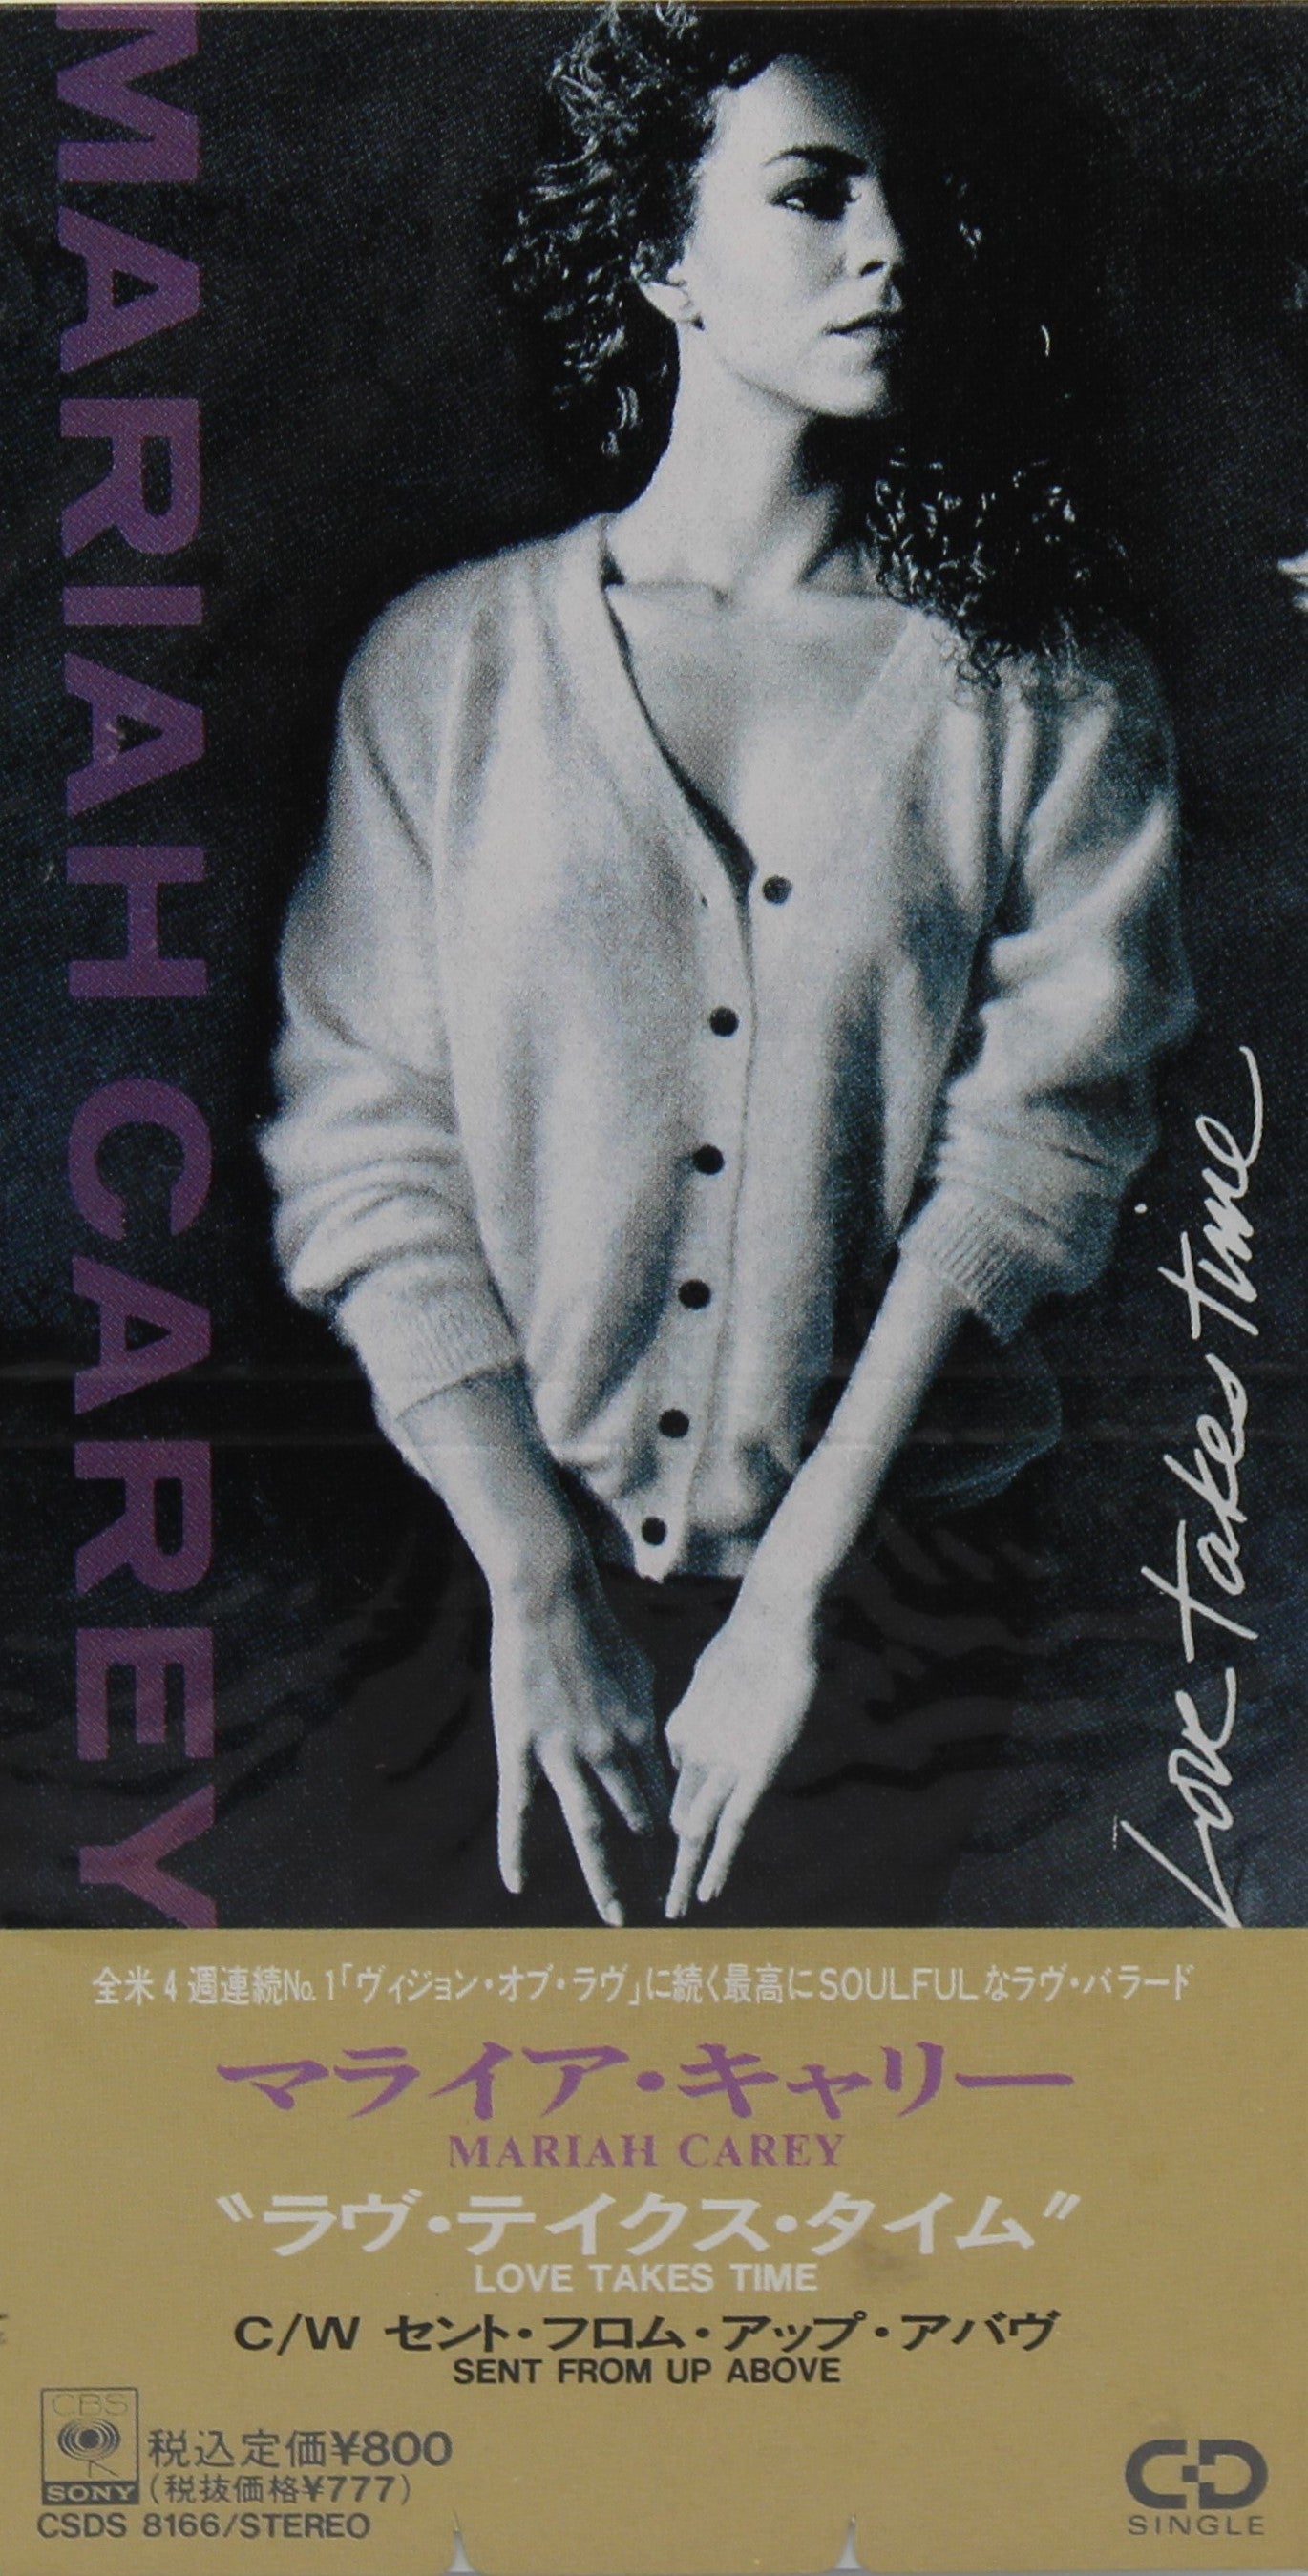 Mariah Carey – Love Takes Time, CD, Single, Mini, Japan 1990